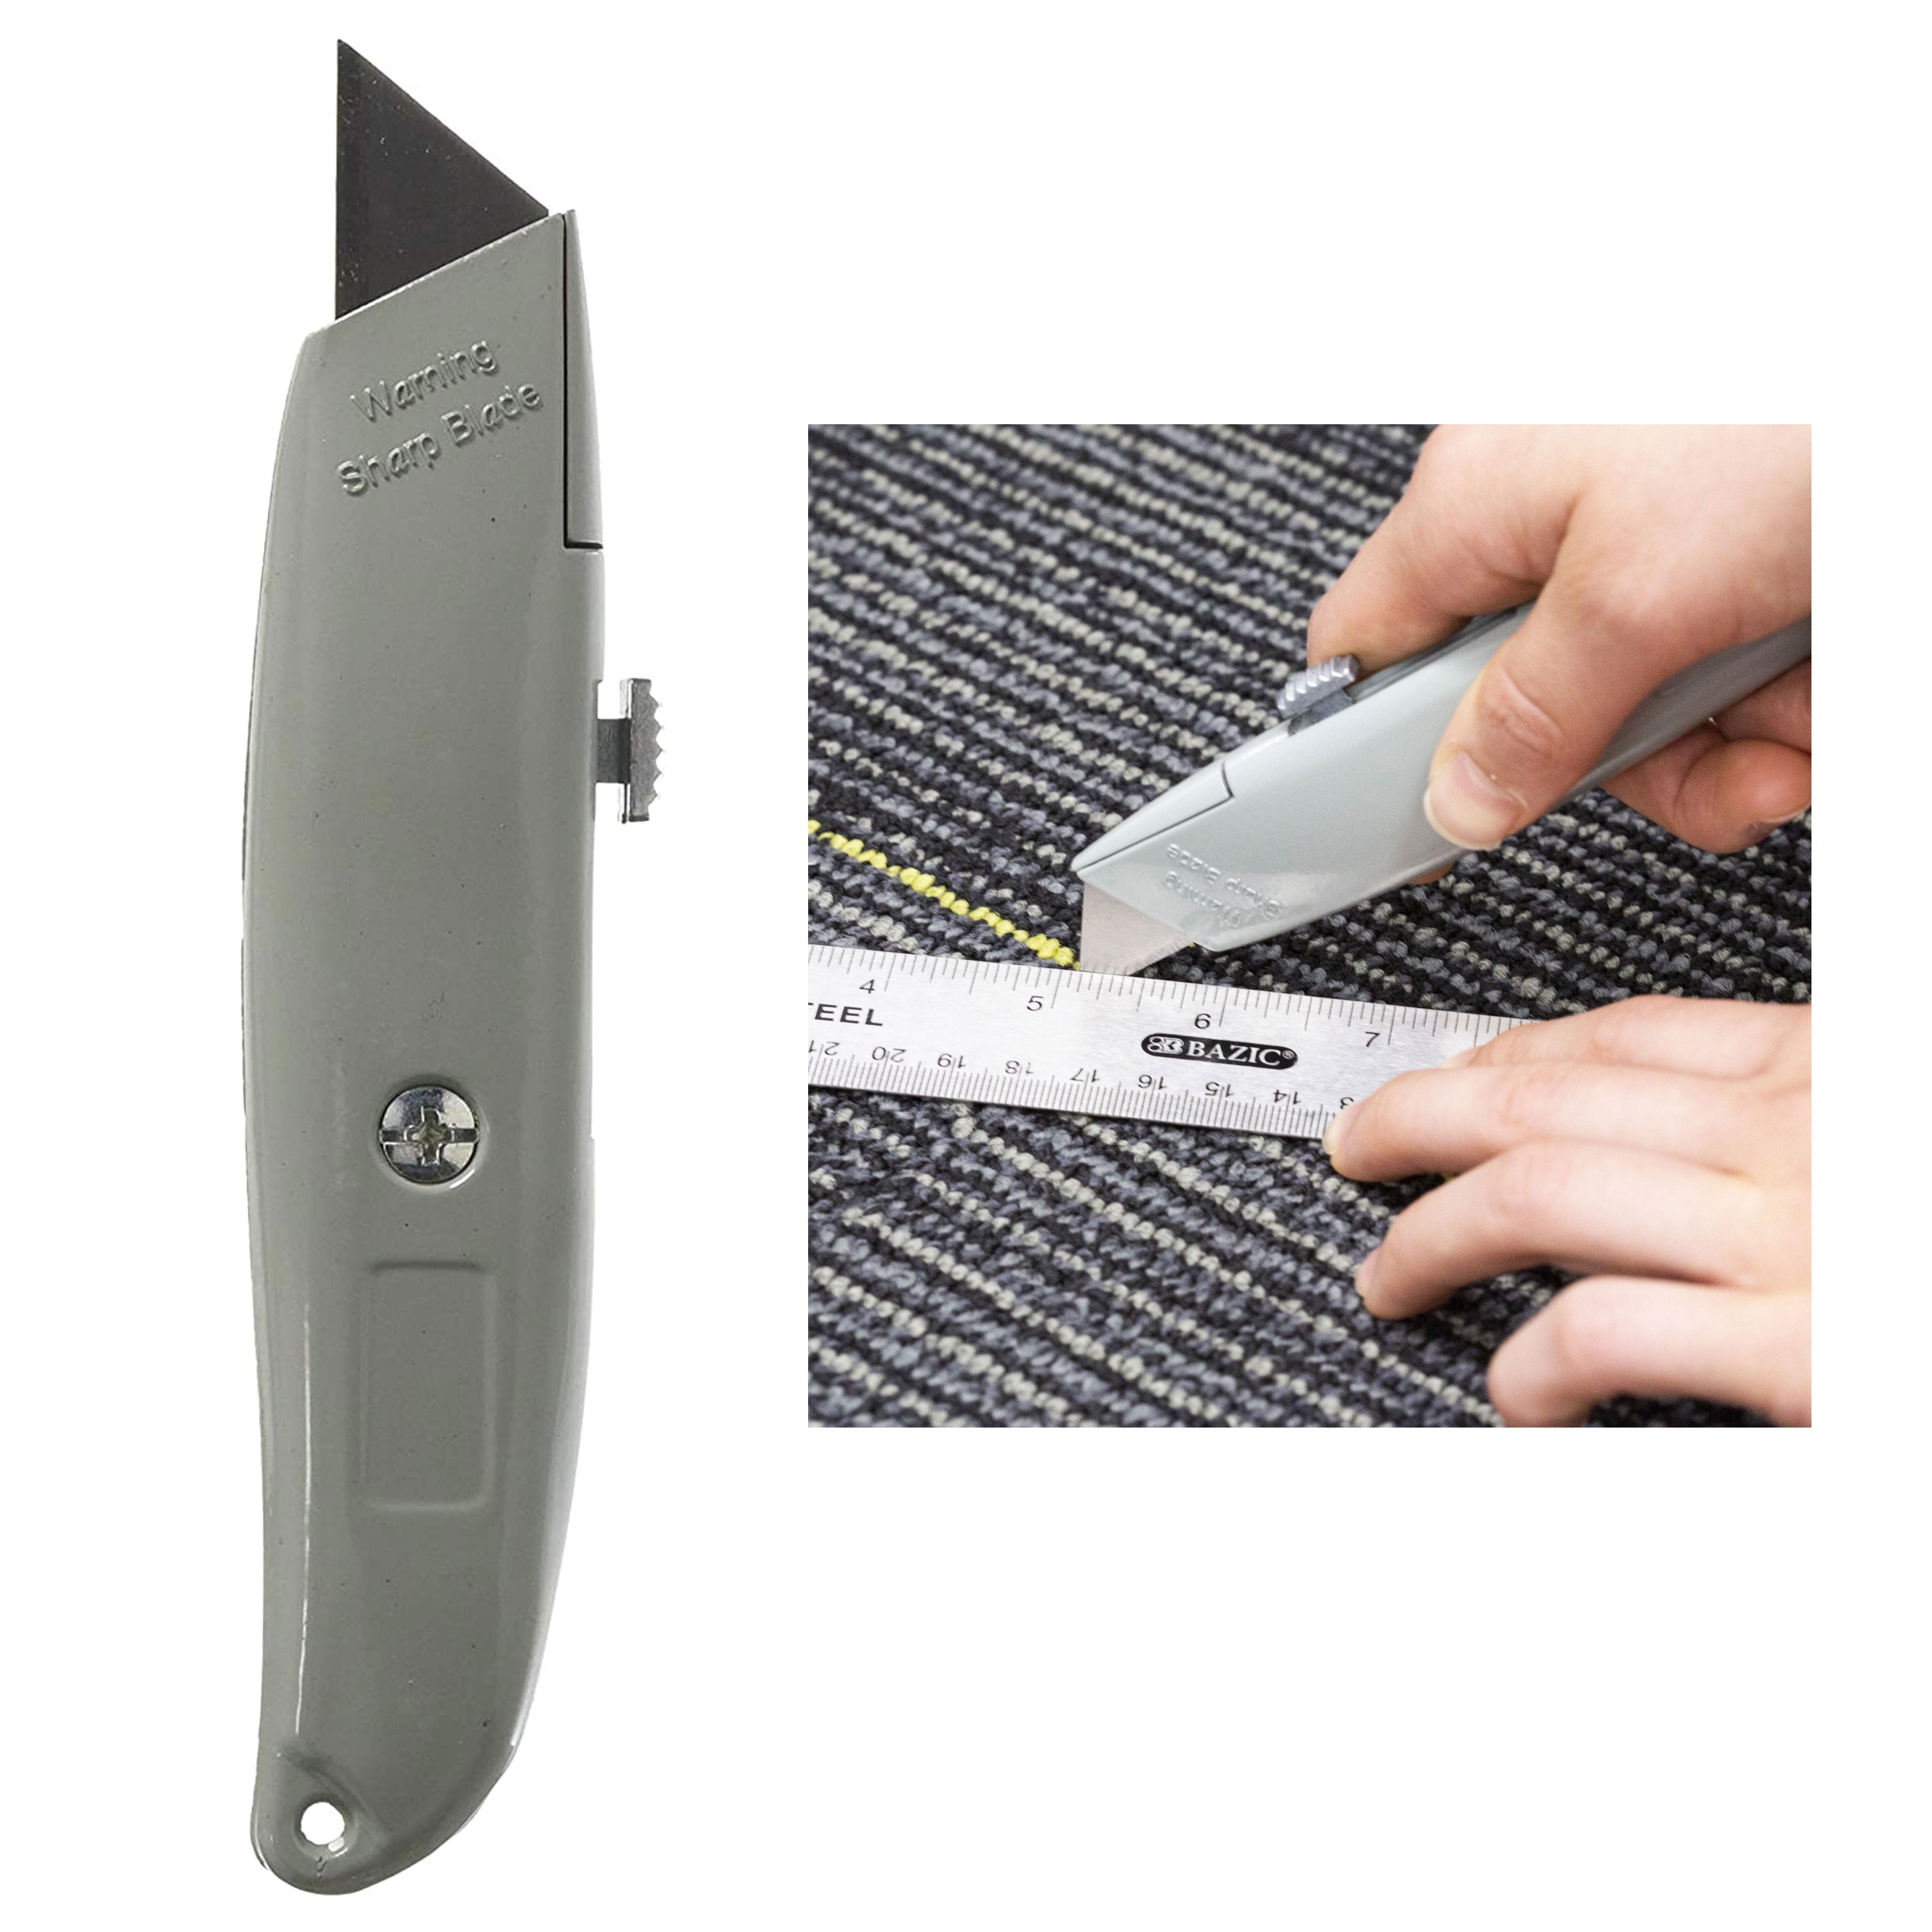 AllTopBargains 8 Utility Knife Box Cutter Retractable Snap Off Lock Blade  Tool Razor Sharp